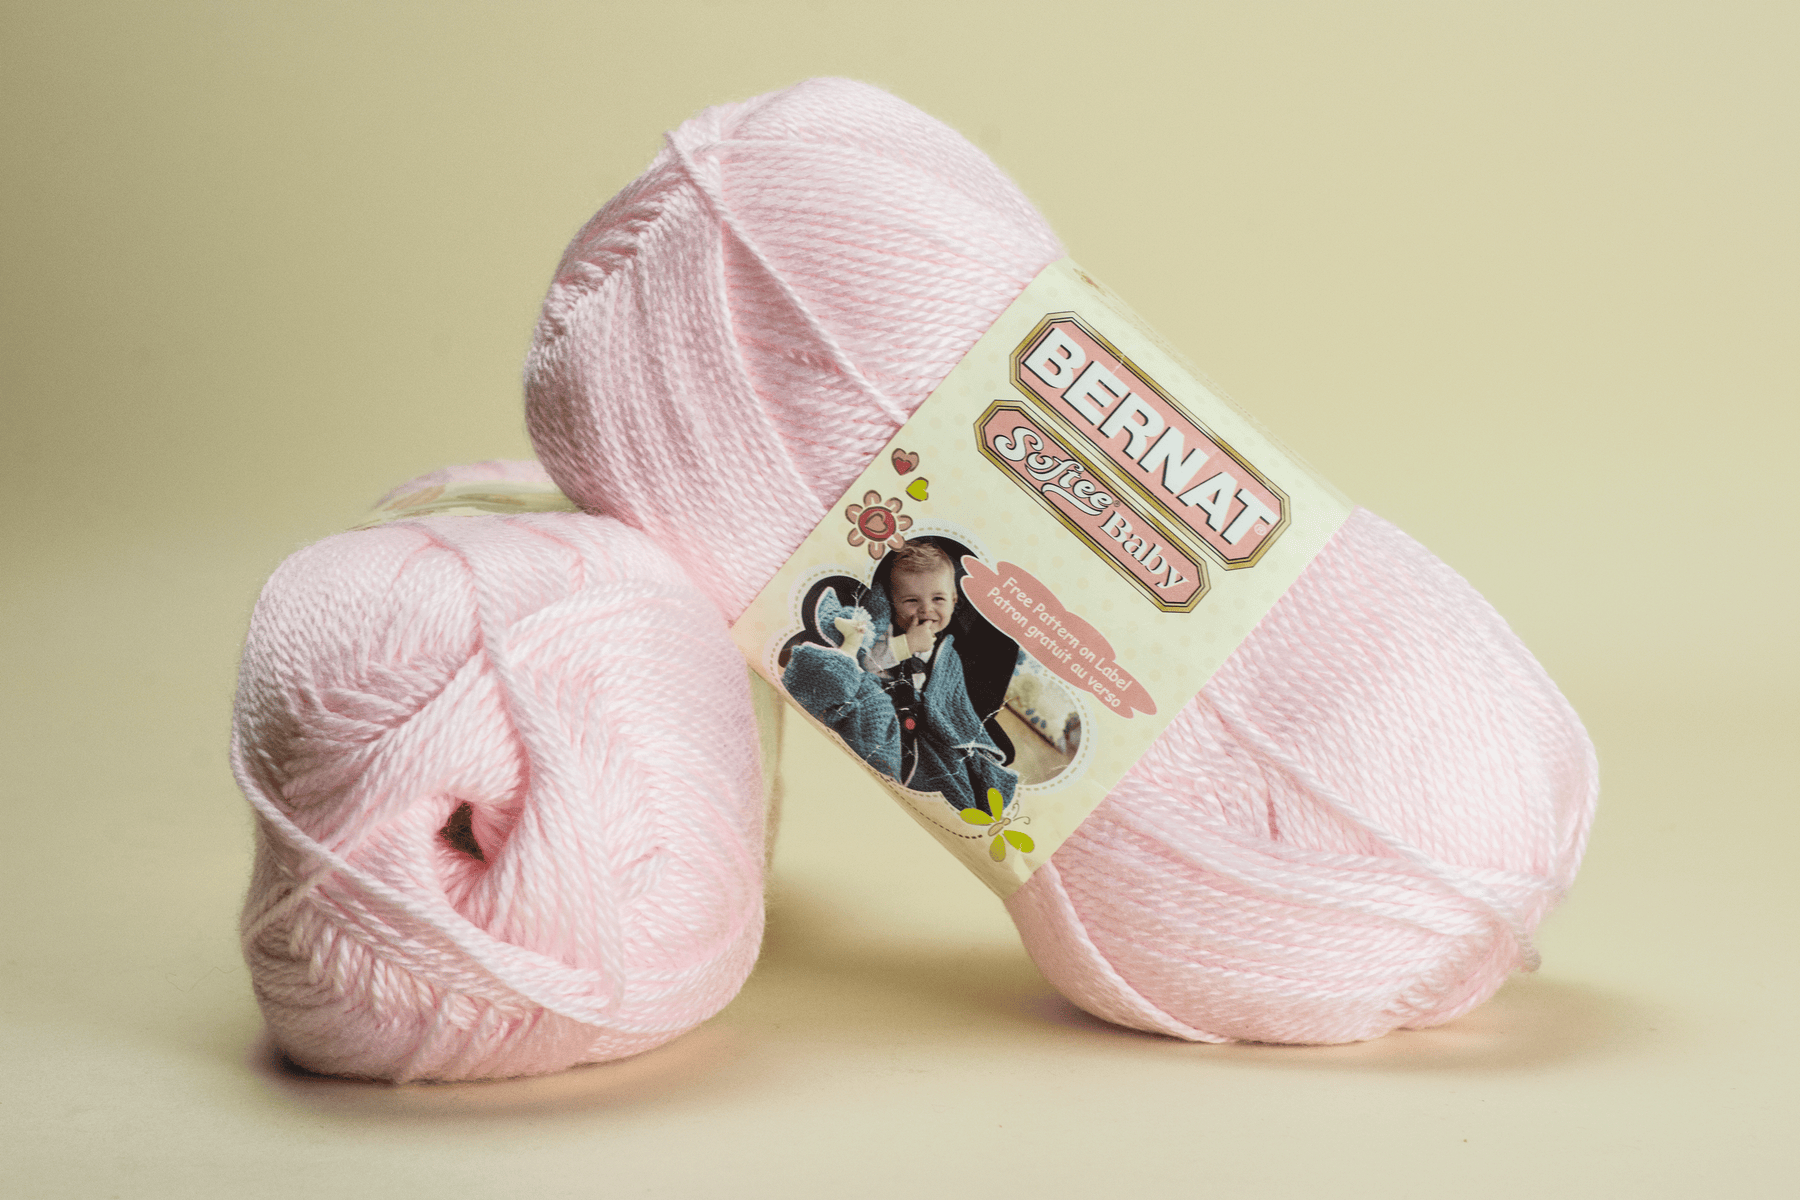 Bernat Softee Baby - Baby Pink Marl (30301) - 140g - Wool